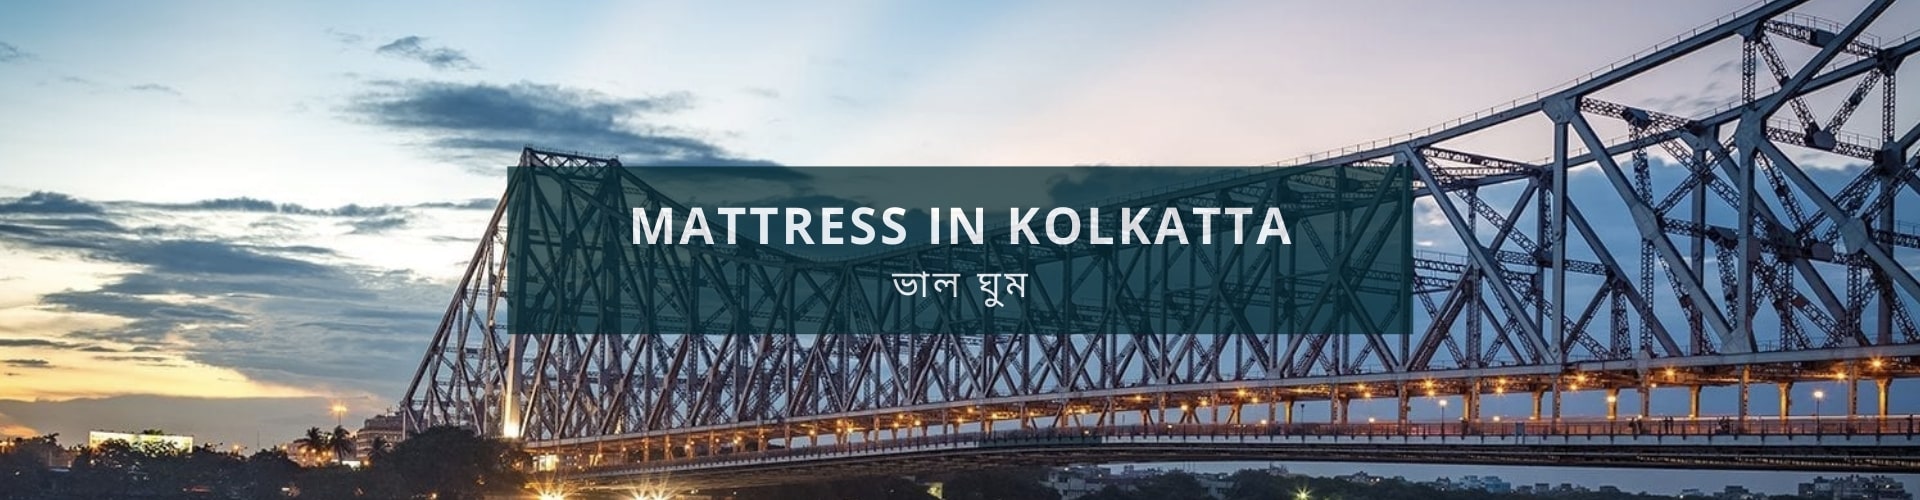 Buy mattress online in kolkata